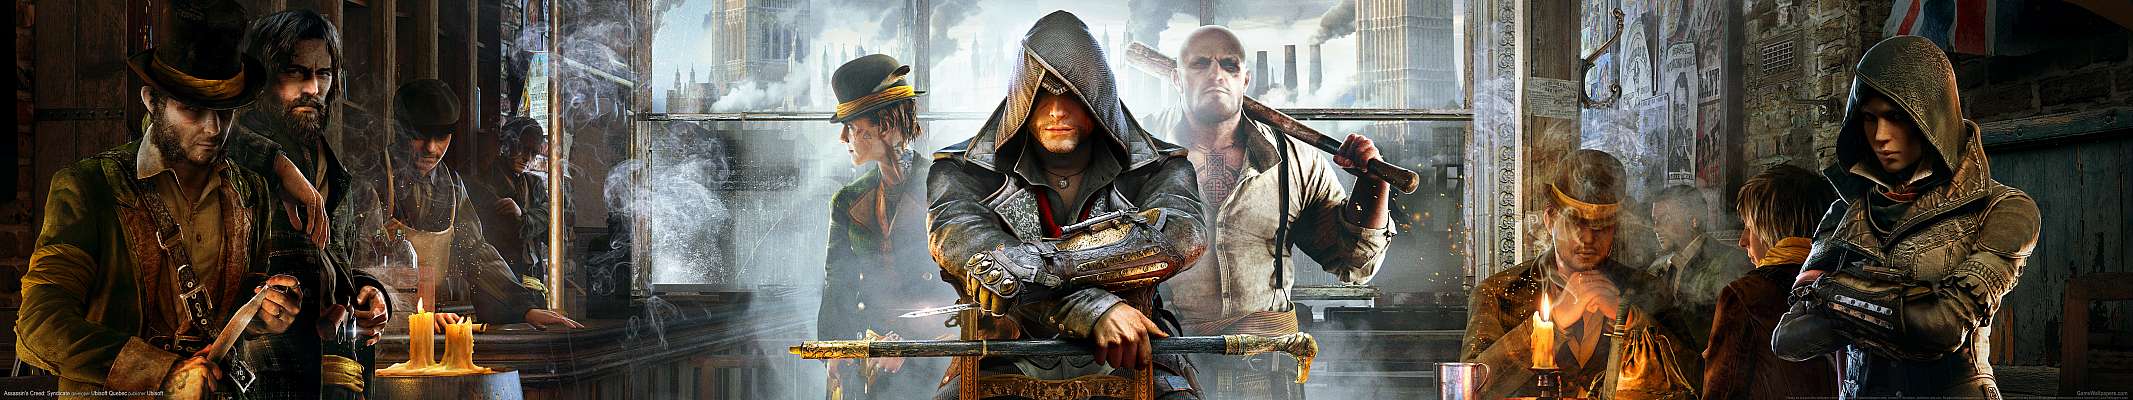 Assassin's Creed: Syndicate triple screen fond d'écran